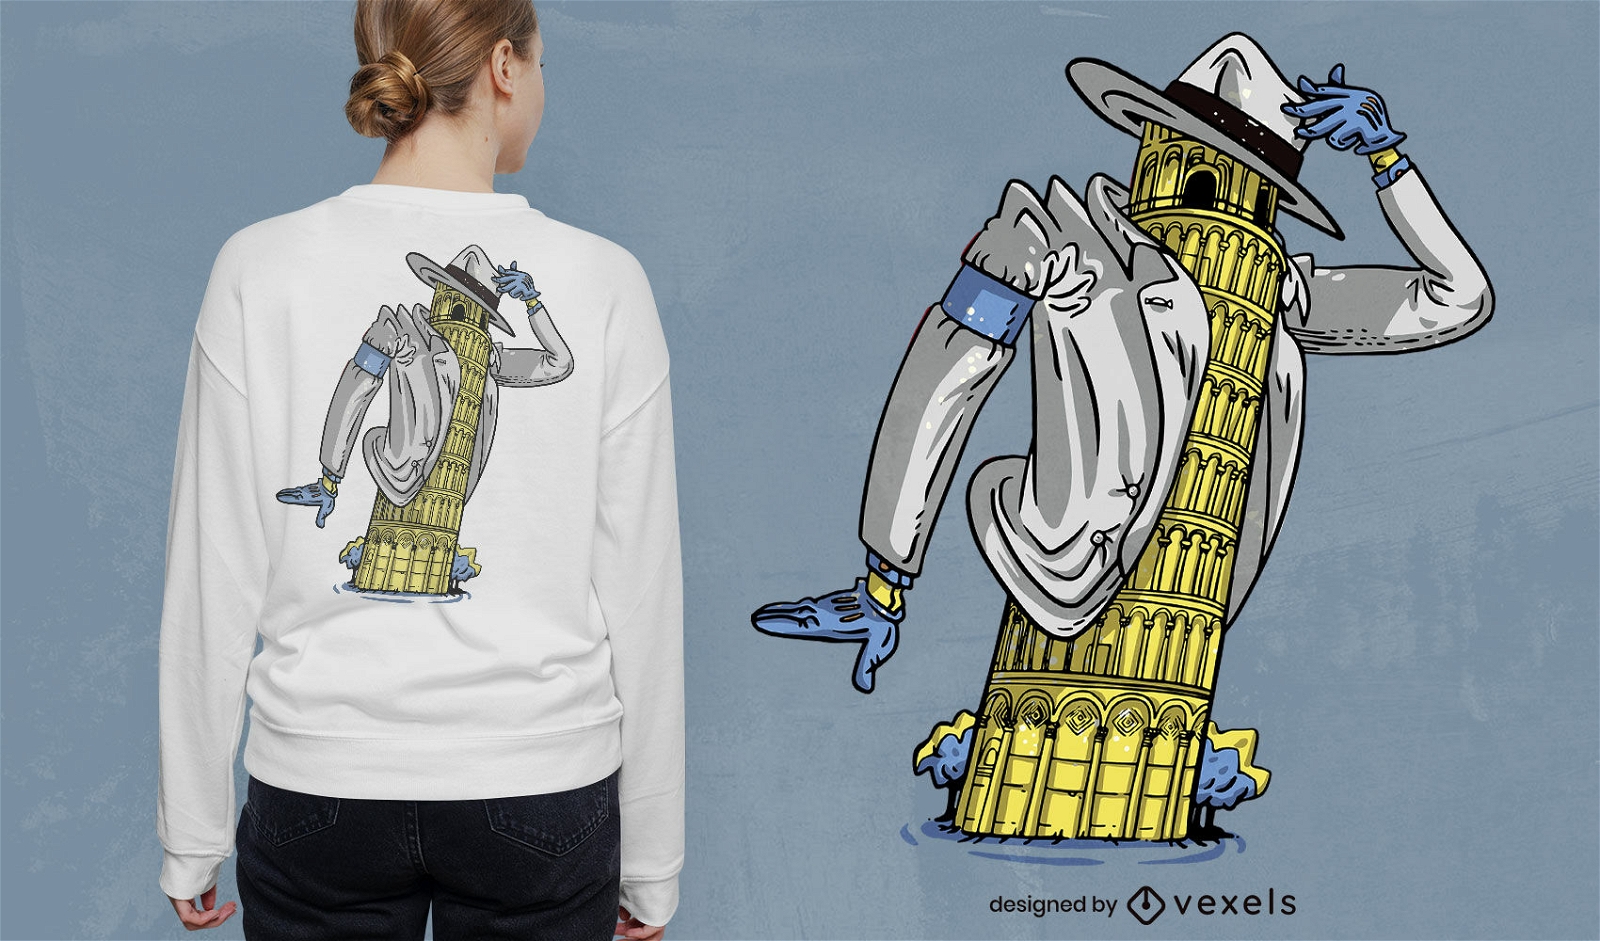 Dise?o de camiseta de parodia de la torre de Pisa del artista pop